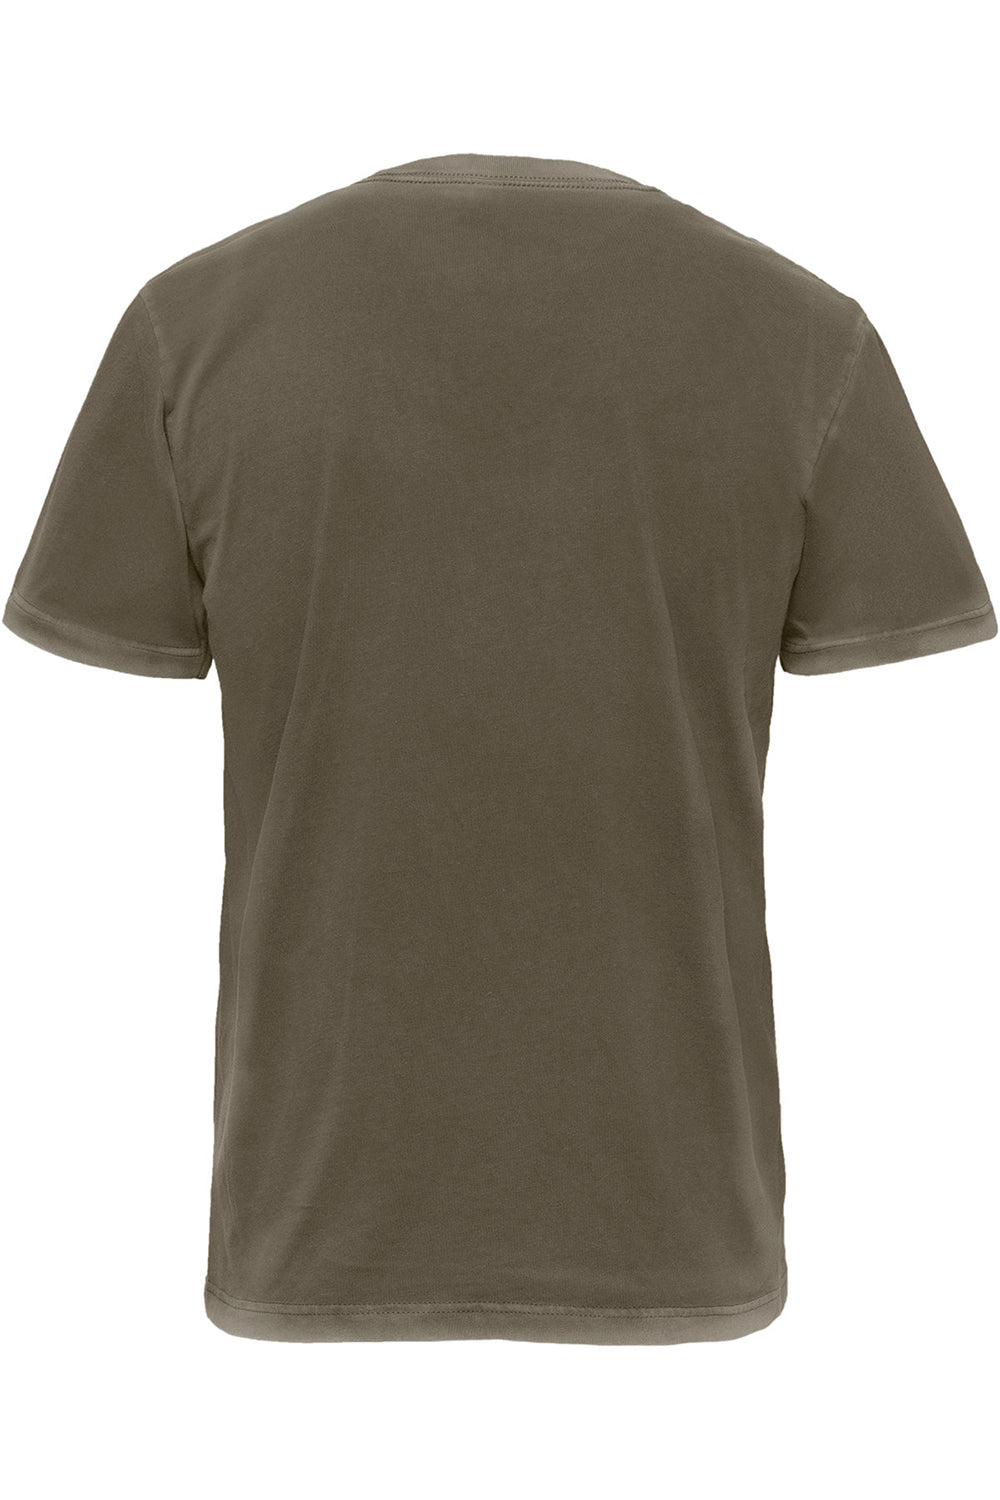 Next Level 3600SW Mens Soft Wash Short Sleeve Crewneck T-Shirt Military Green Flat Back